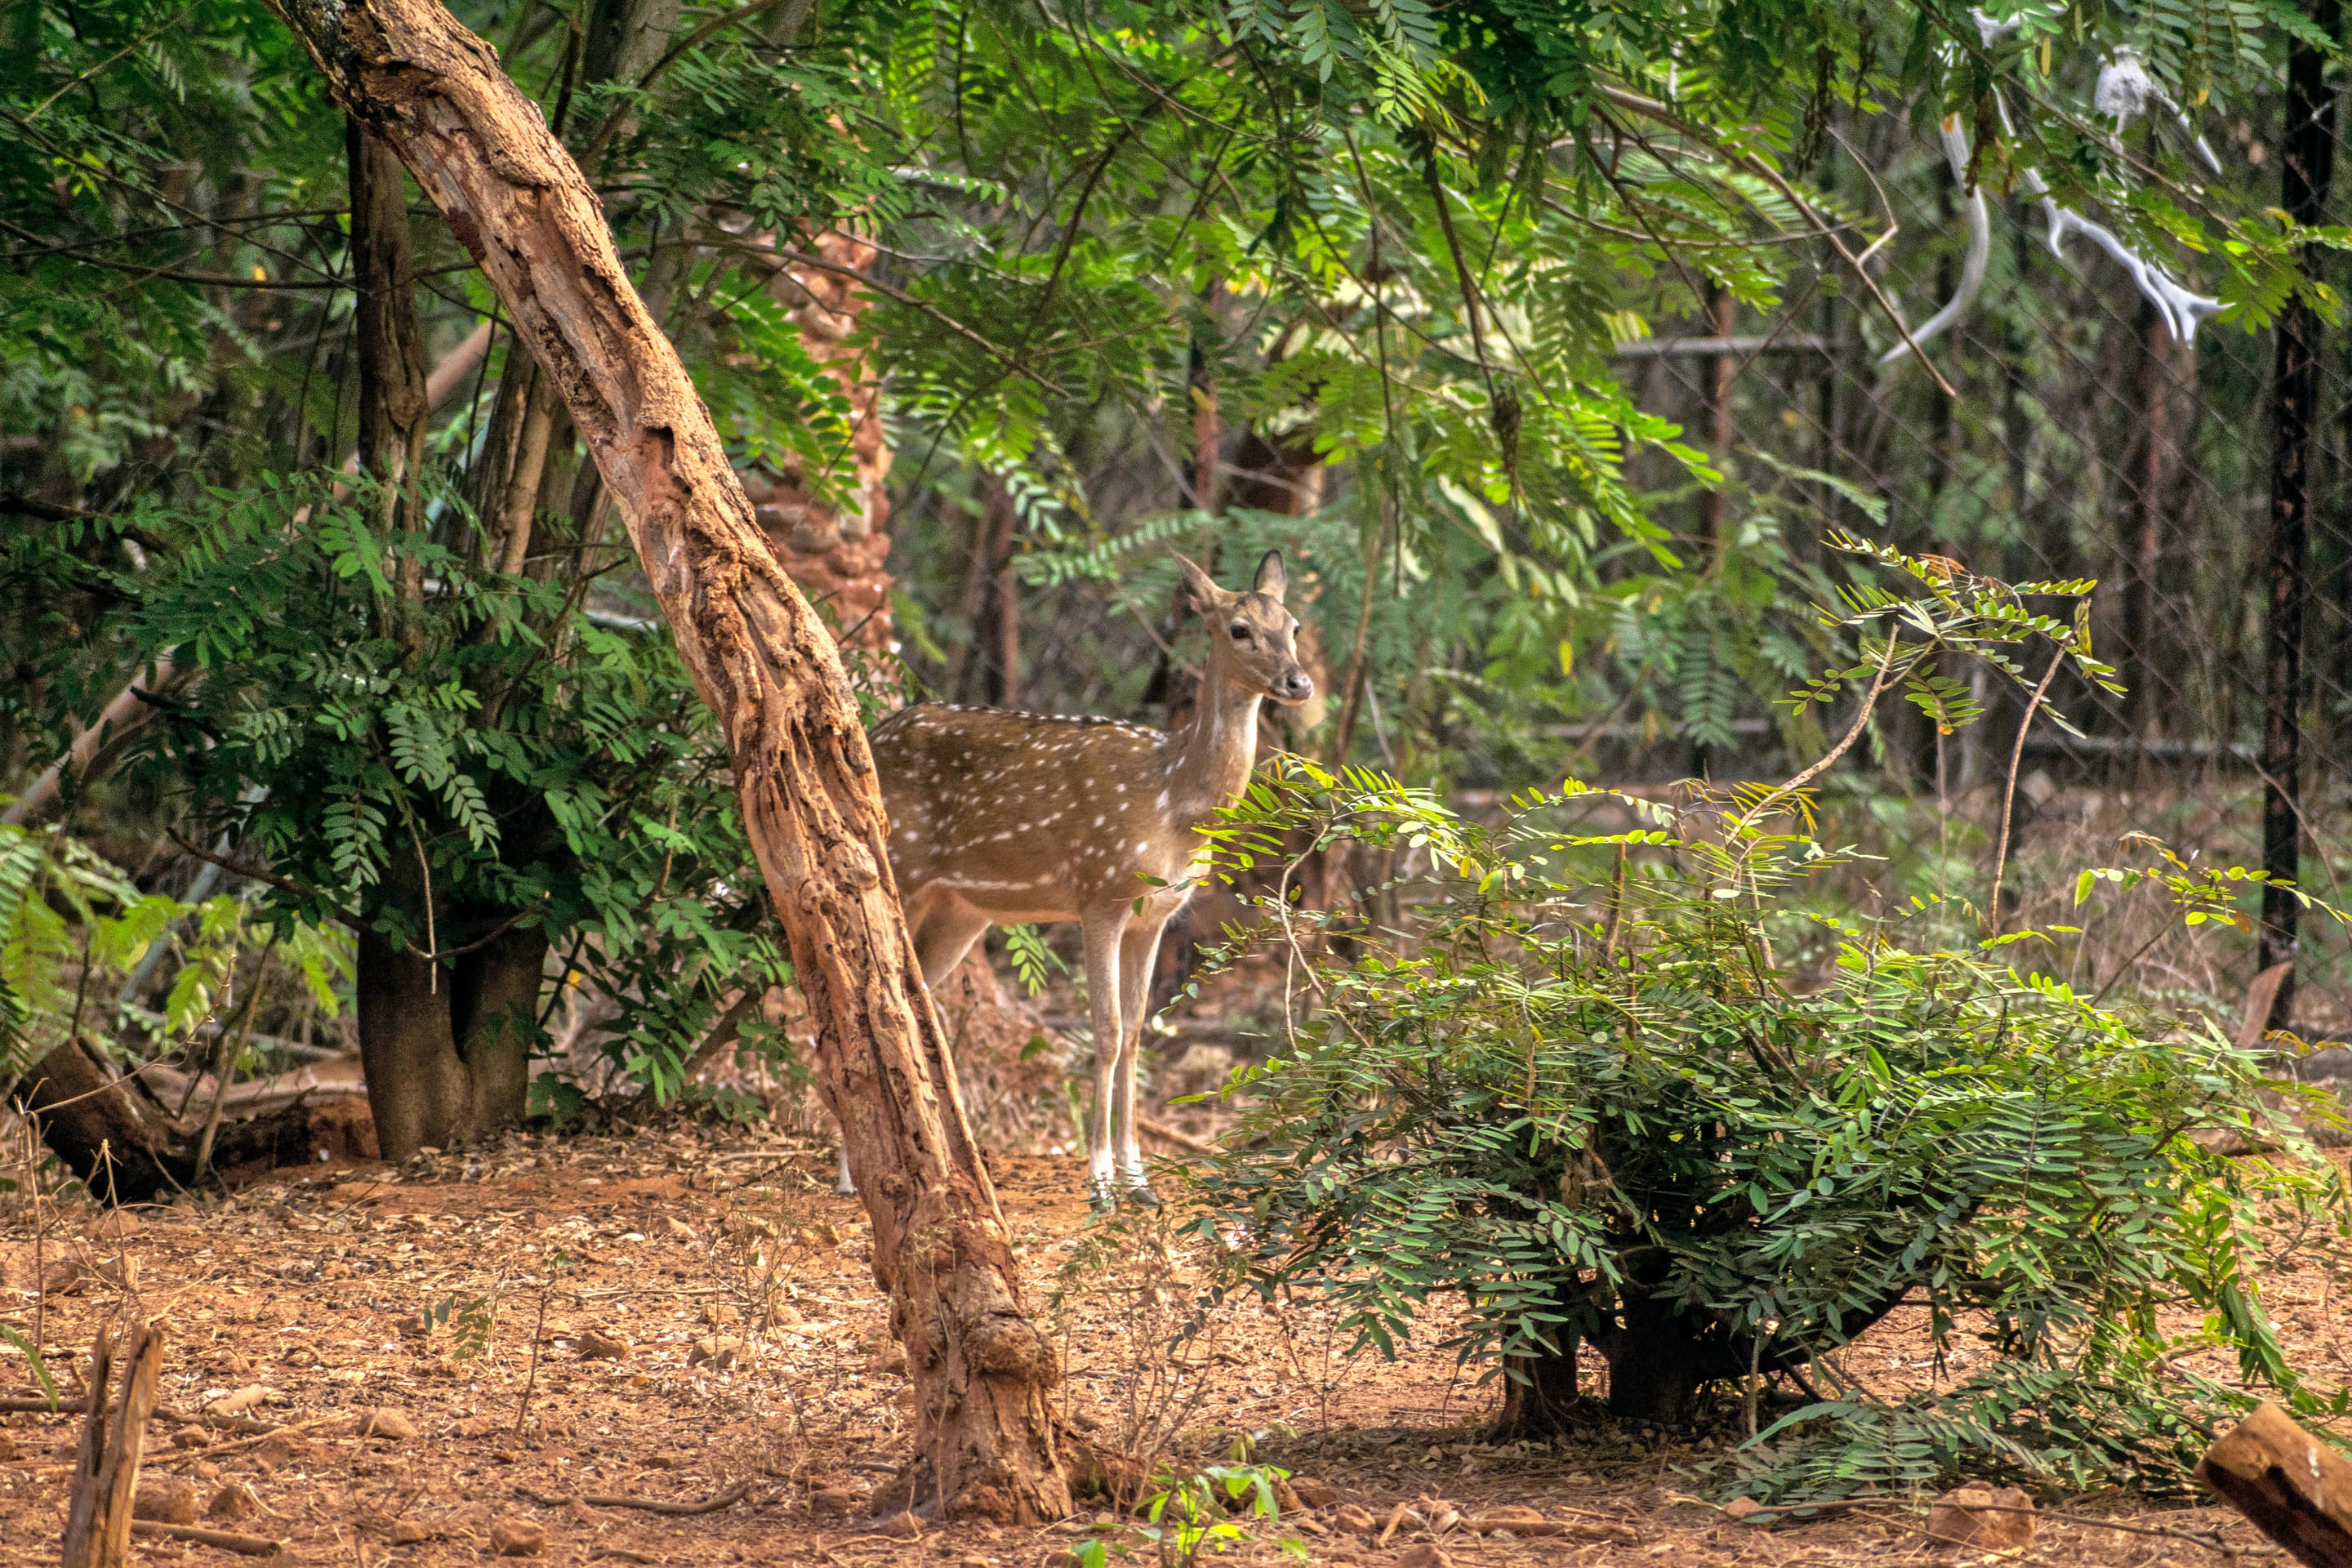 Indira Gandhi Zoological Park Overview